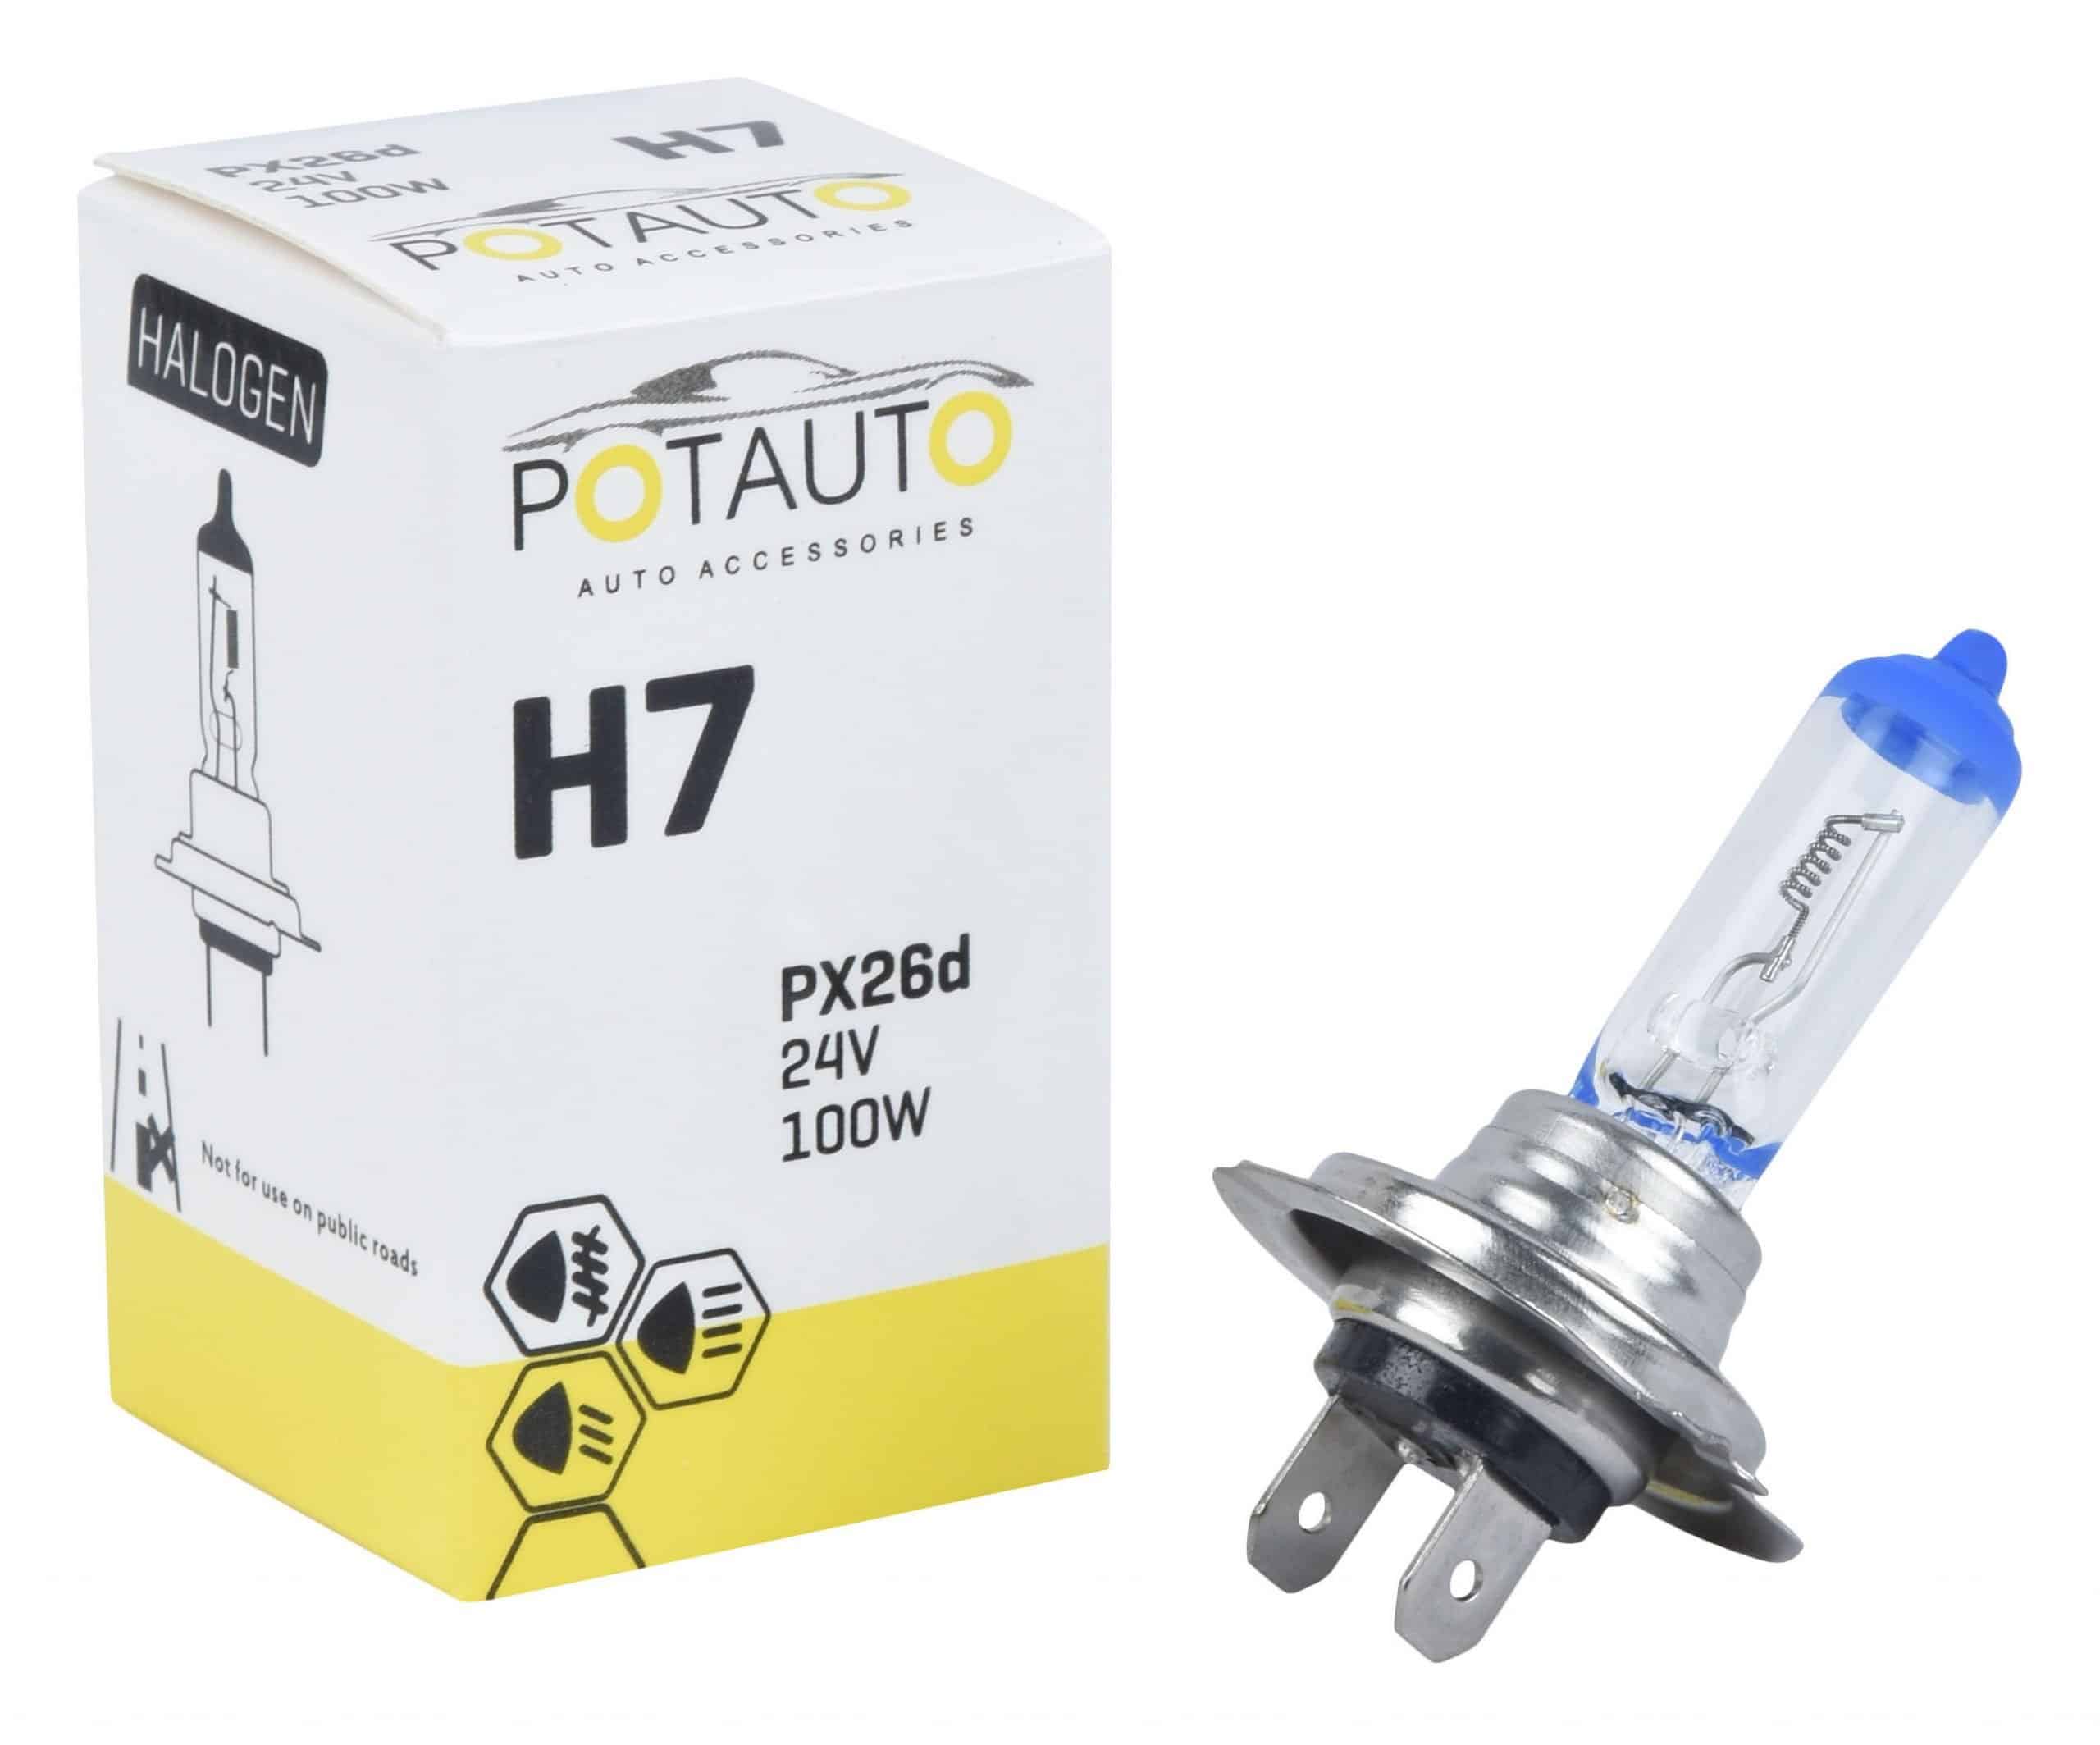 Potauto H7 Headlight Bulb PX26D 24V 100W